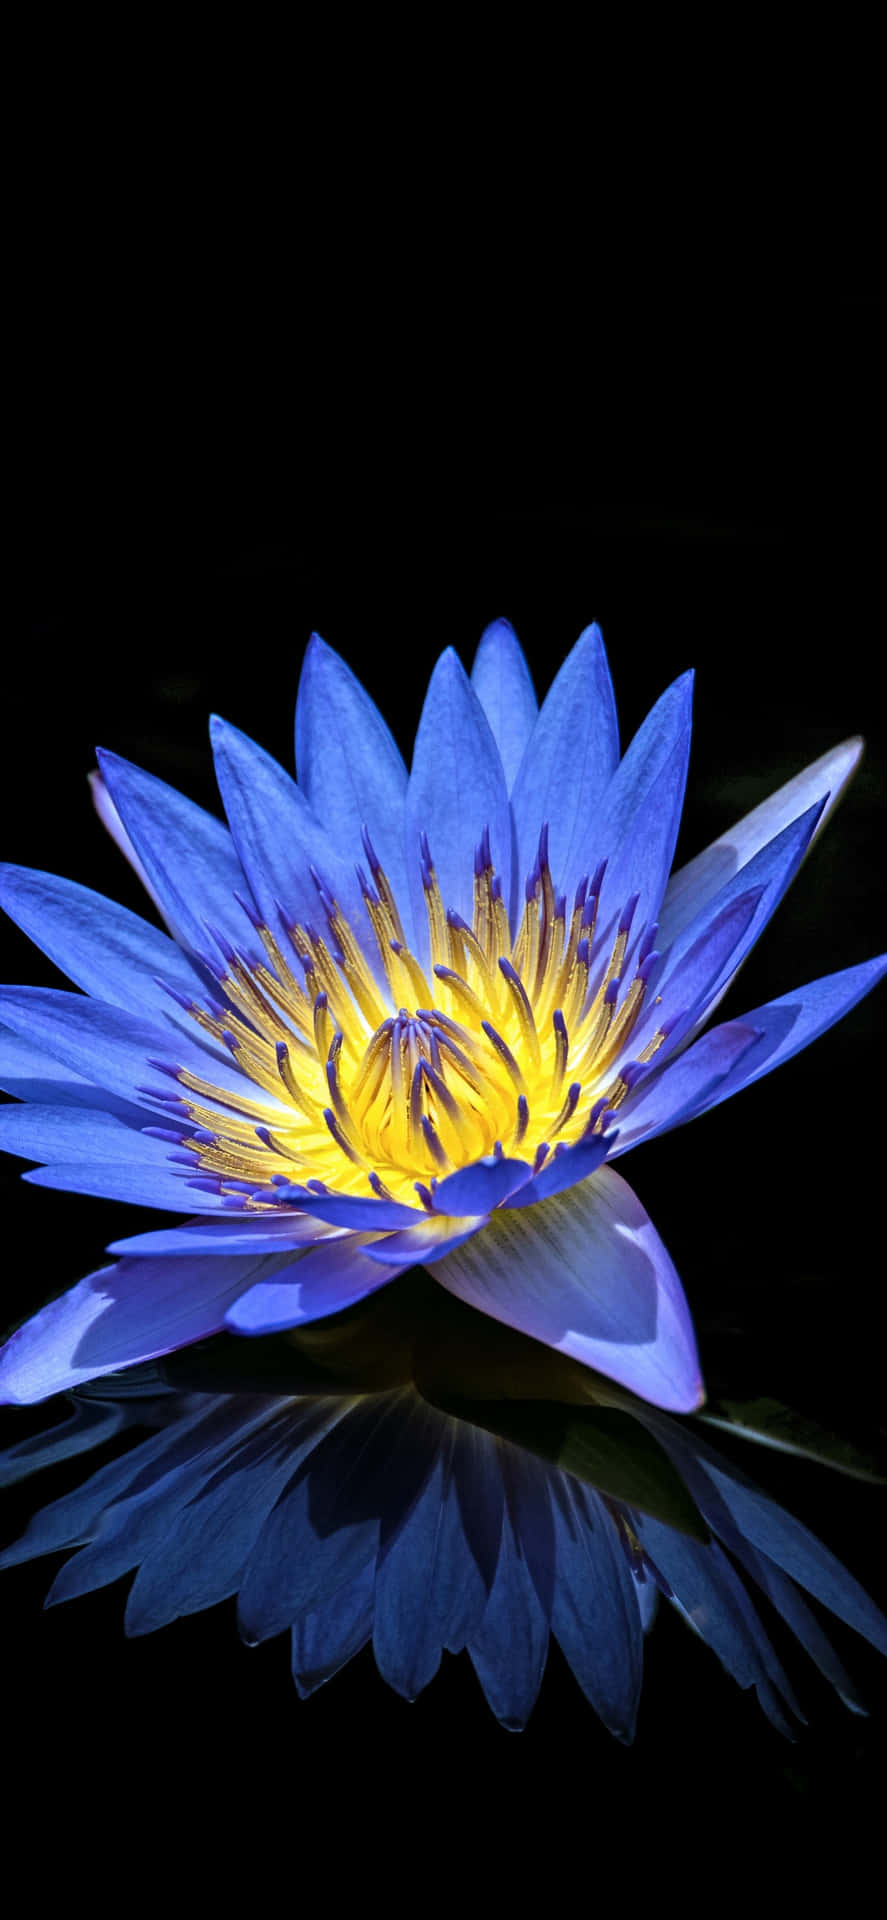 Imagens De Lotus